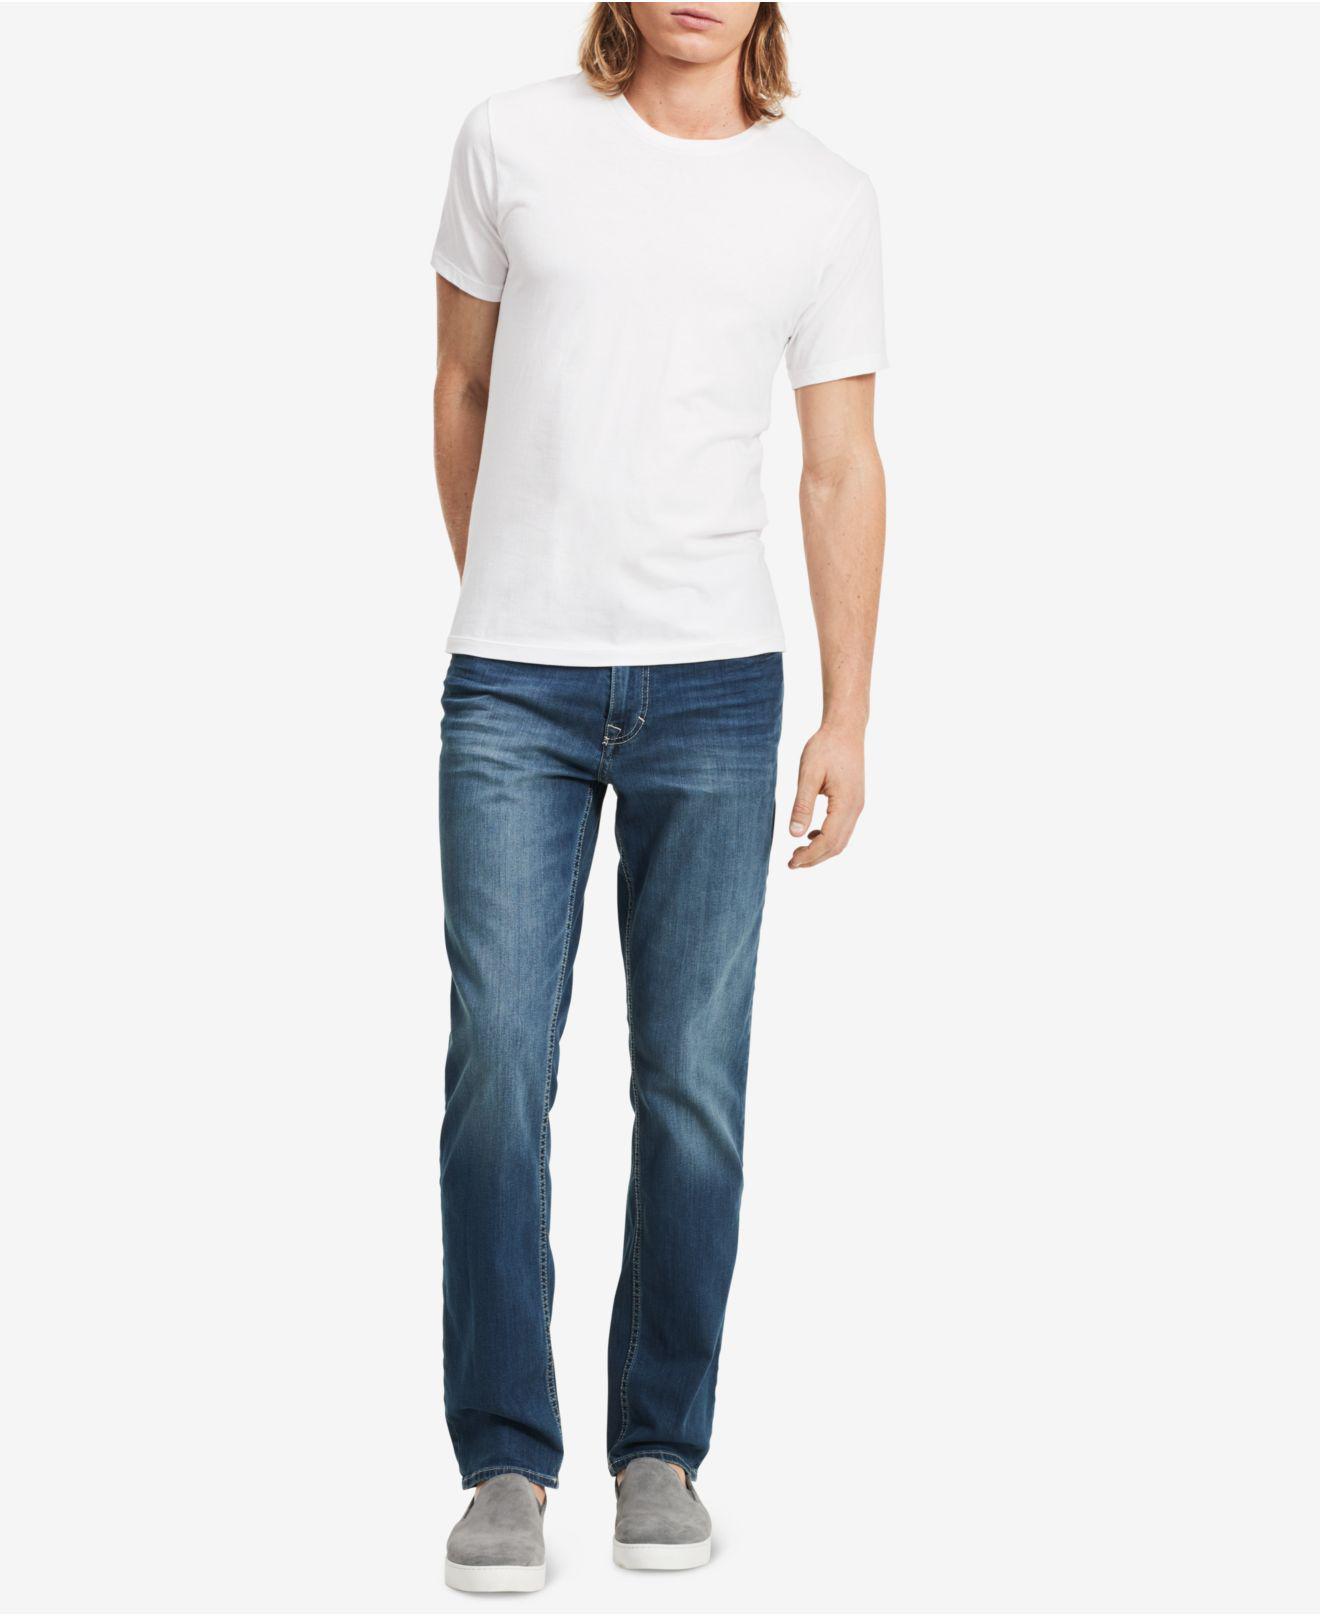 Lyst - Calvin Klein Slim-straight Fit Jeans in Blue for Men